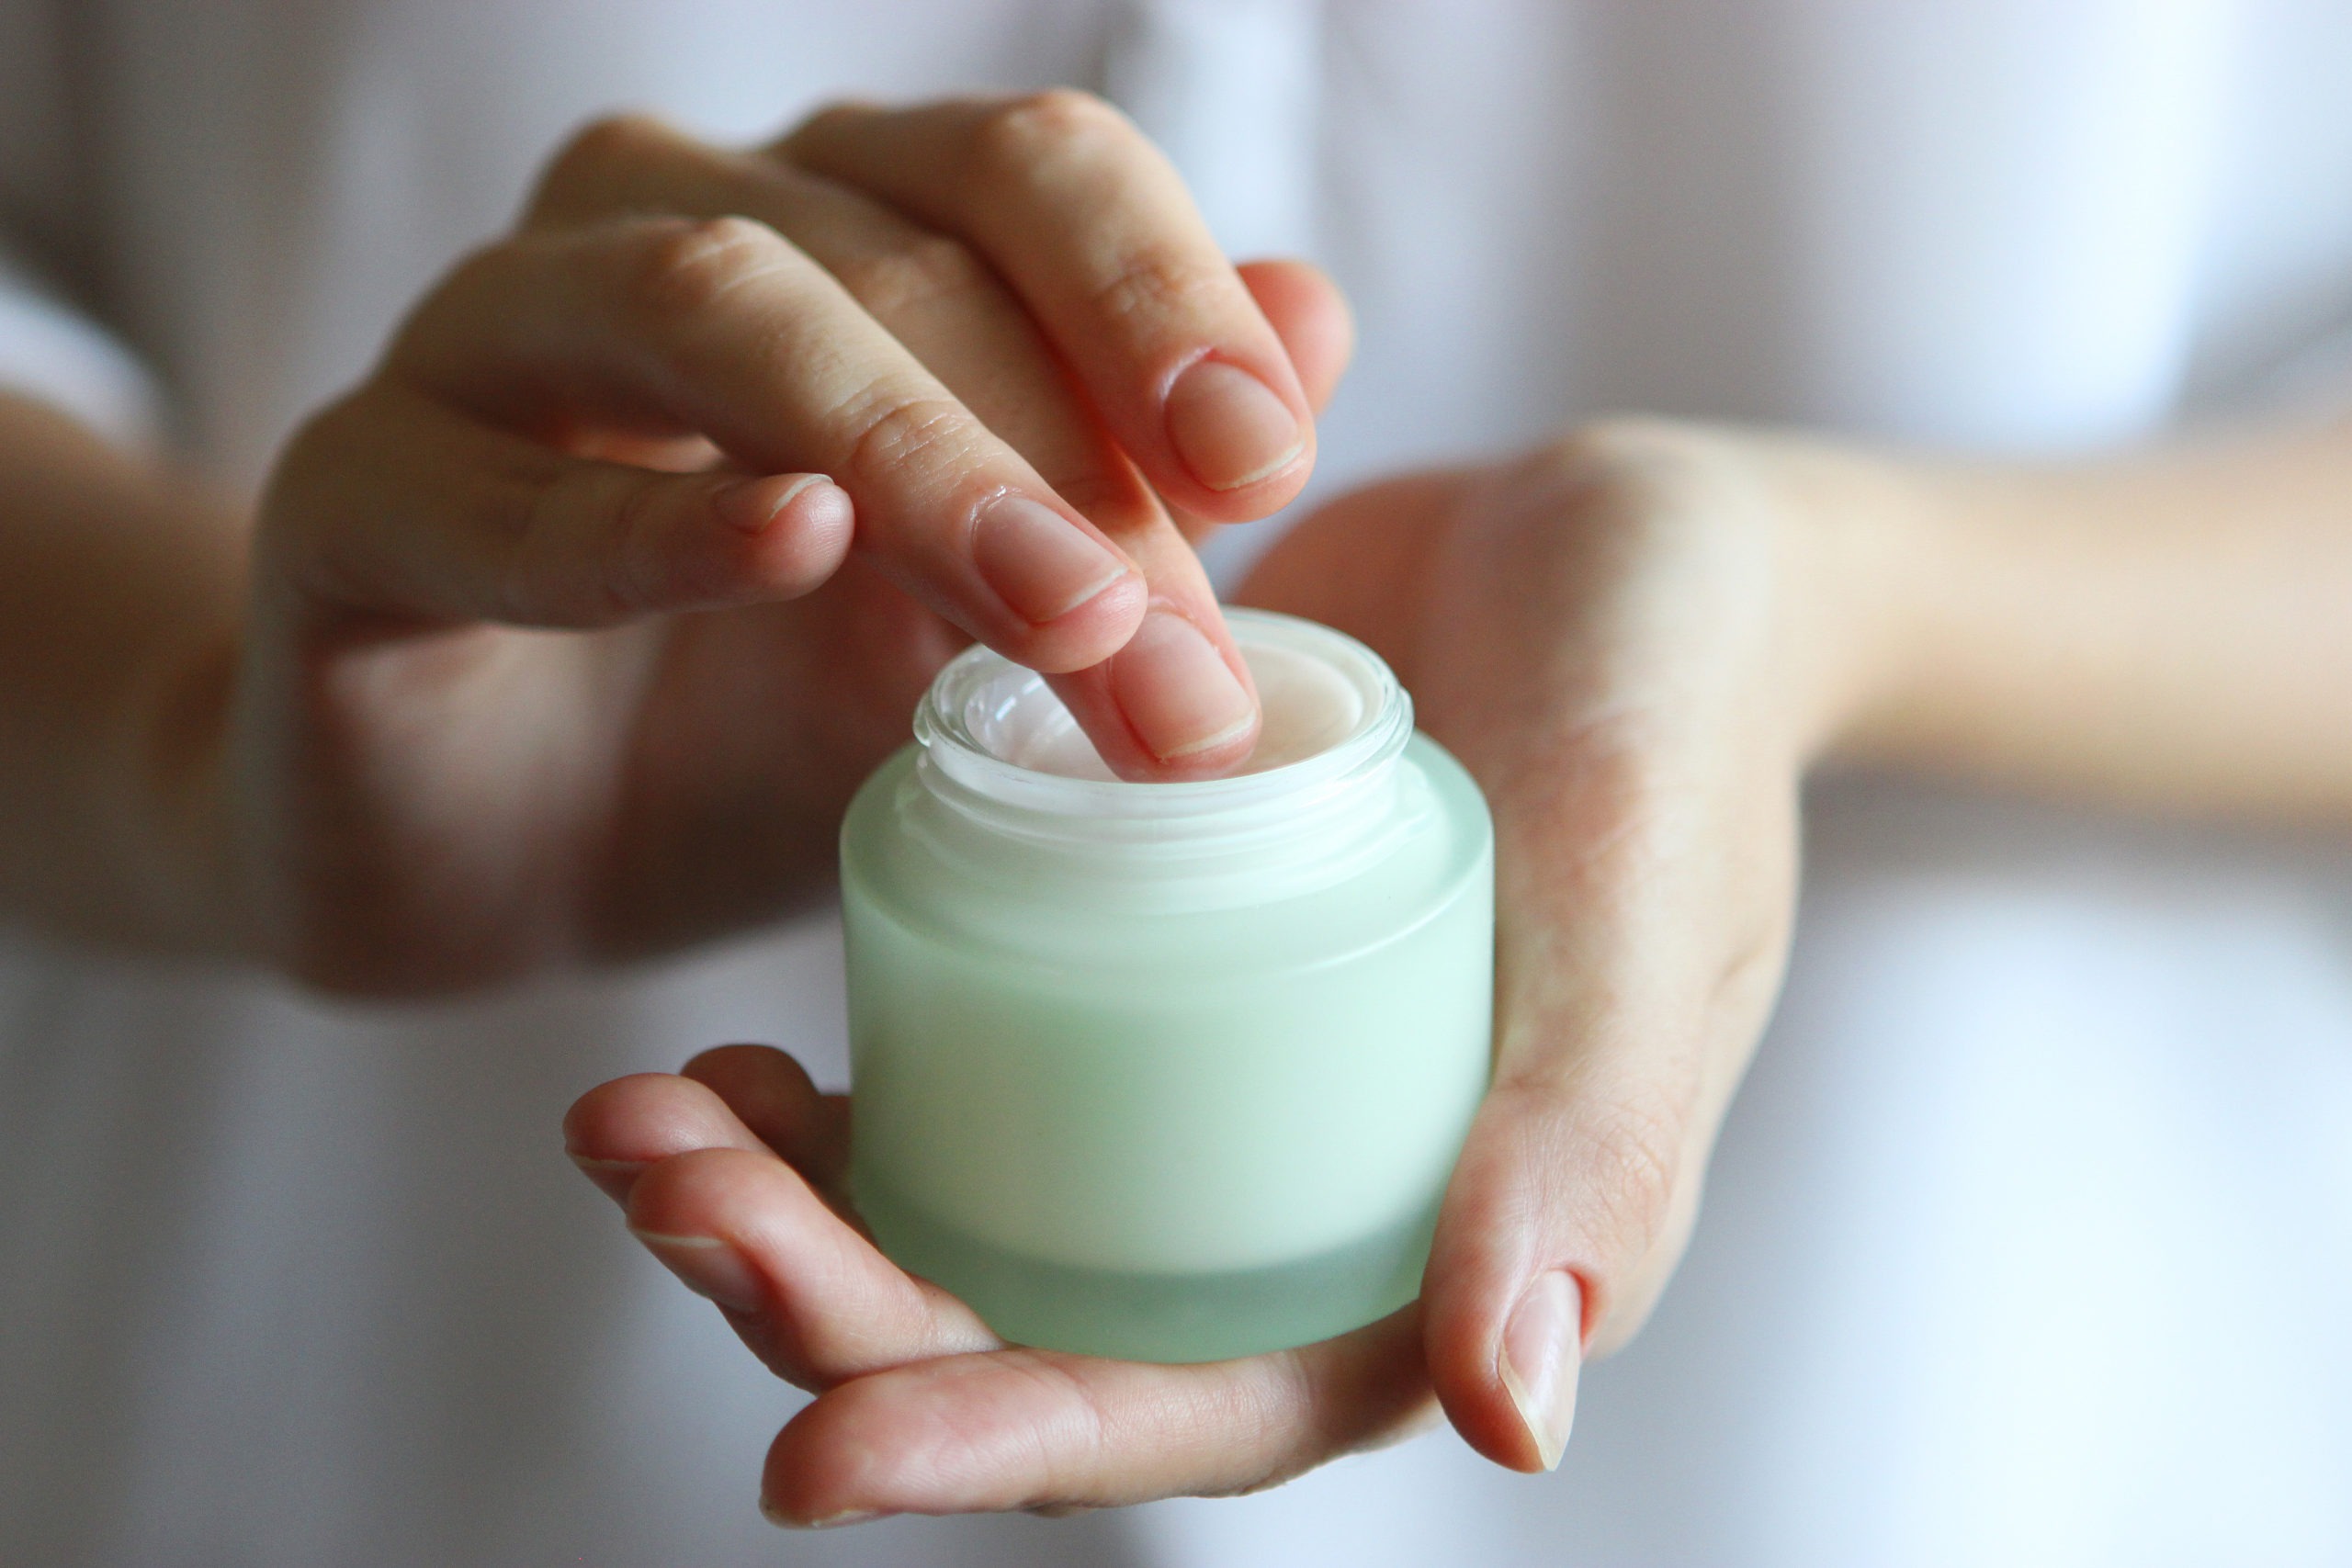 girl uses hand cream. Skin care, skin hydration.